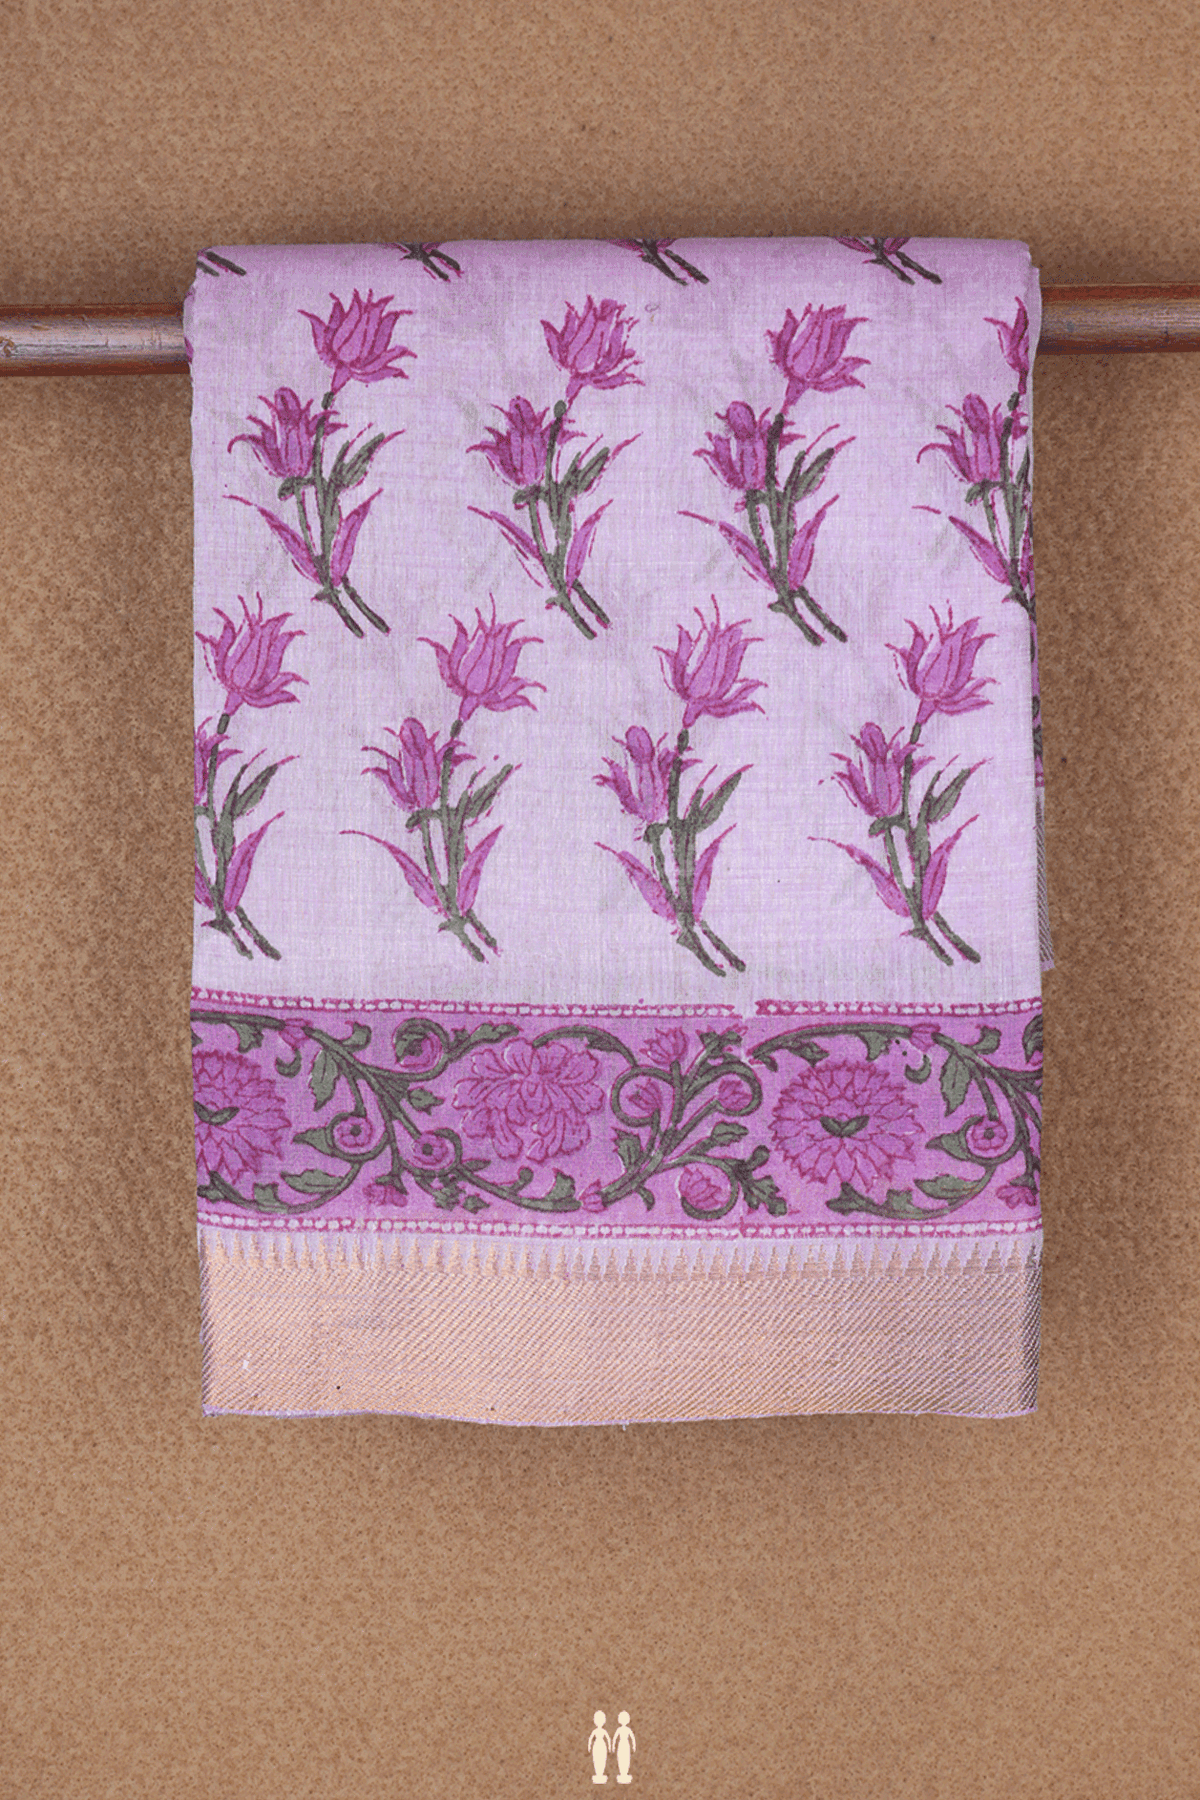 Floral Design Pastel Purple Printed Cotton Saree